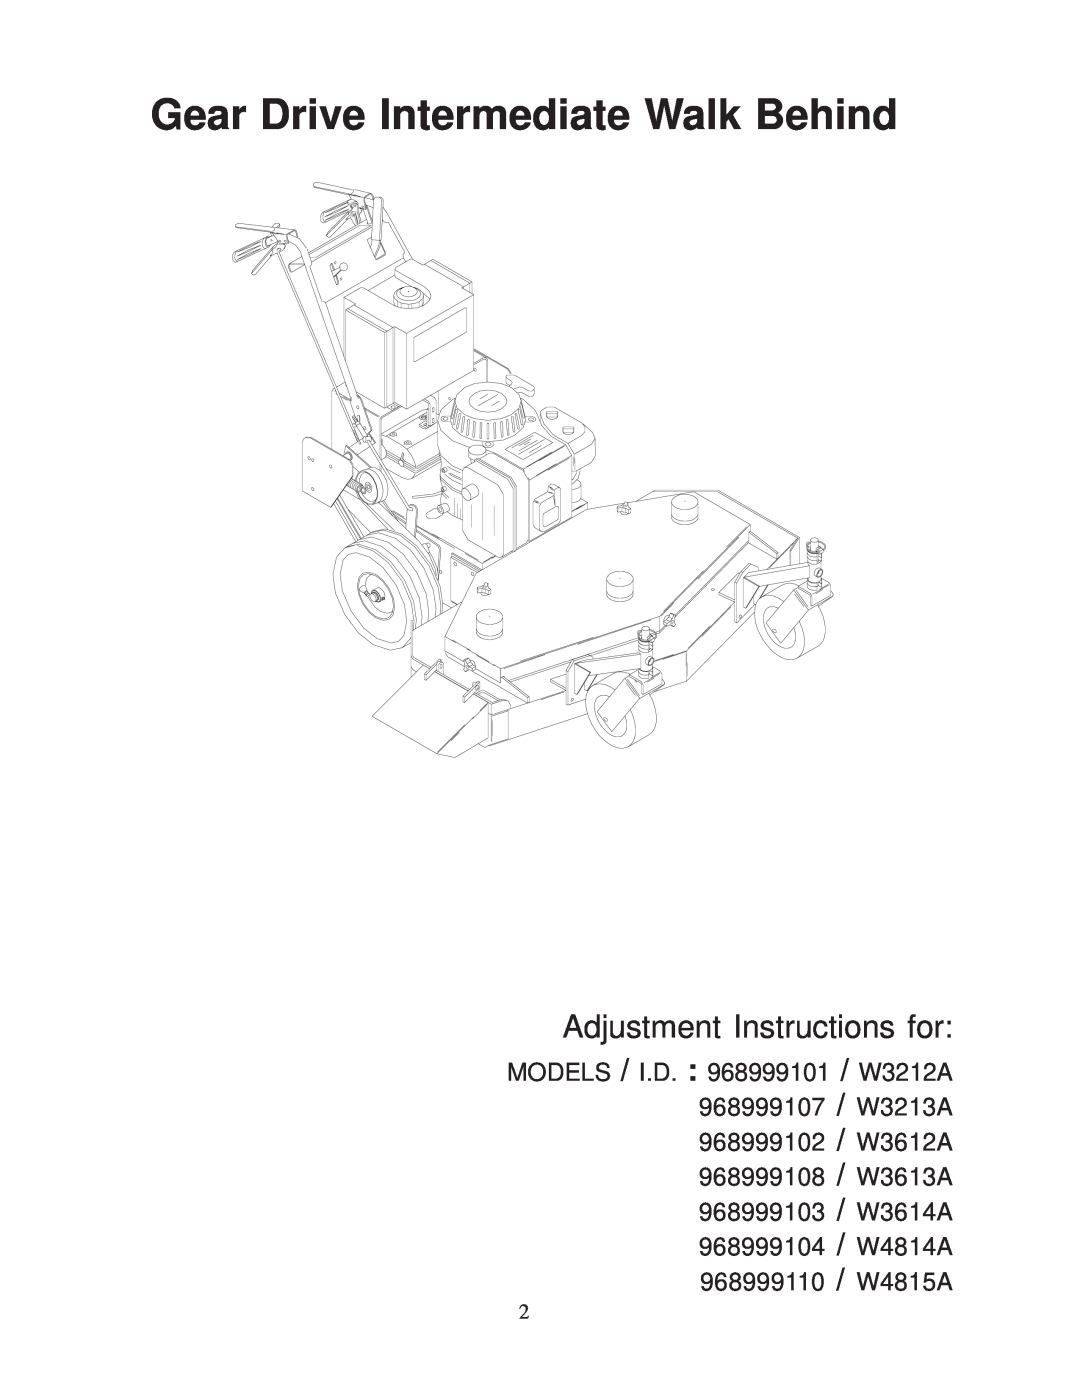 Husqvarna 968999101 / W3212A Gear Drive Intermediate Walk Behind, Adjustment Instructions for, Models / I.D, 968999107 